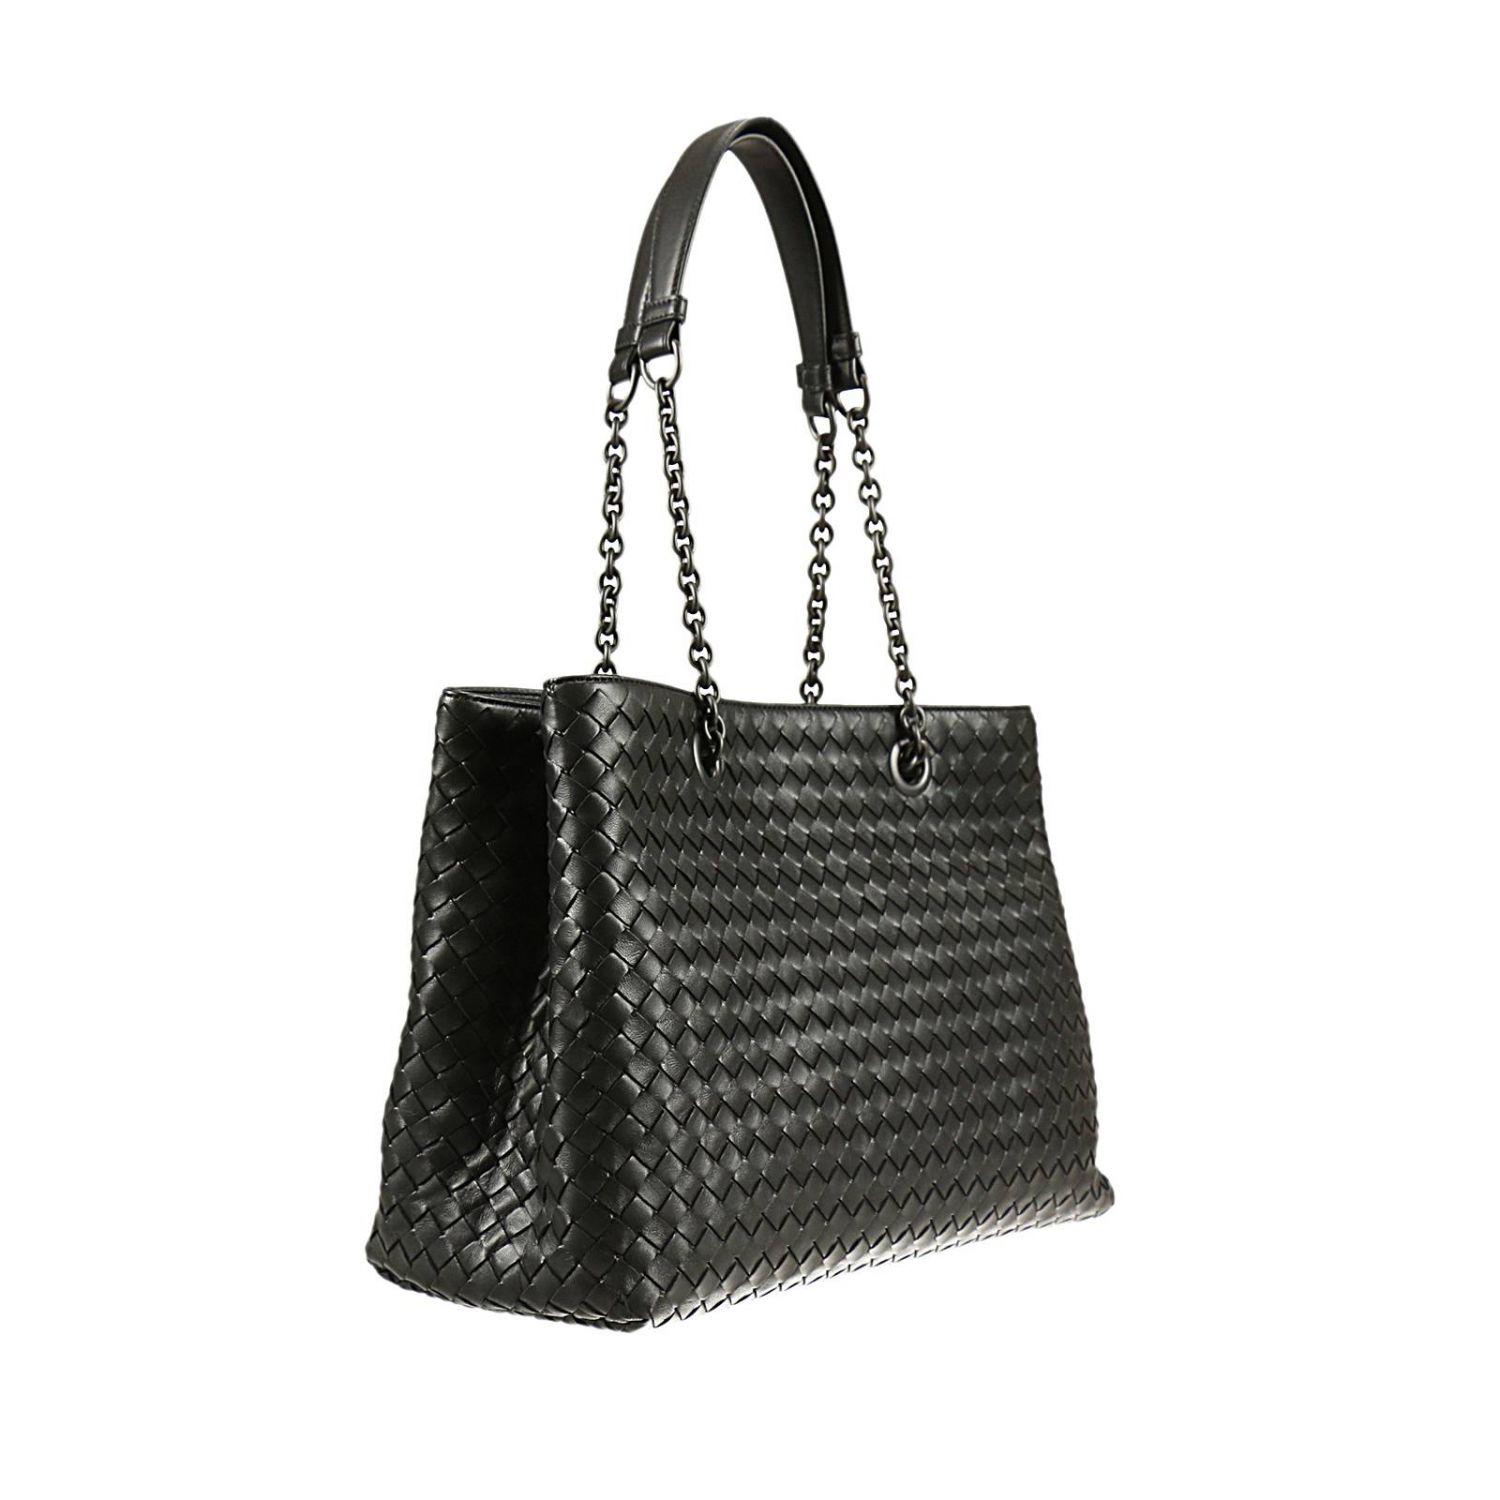 Lyst - Bottega Veneta Shoulder Bag in Black